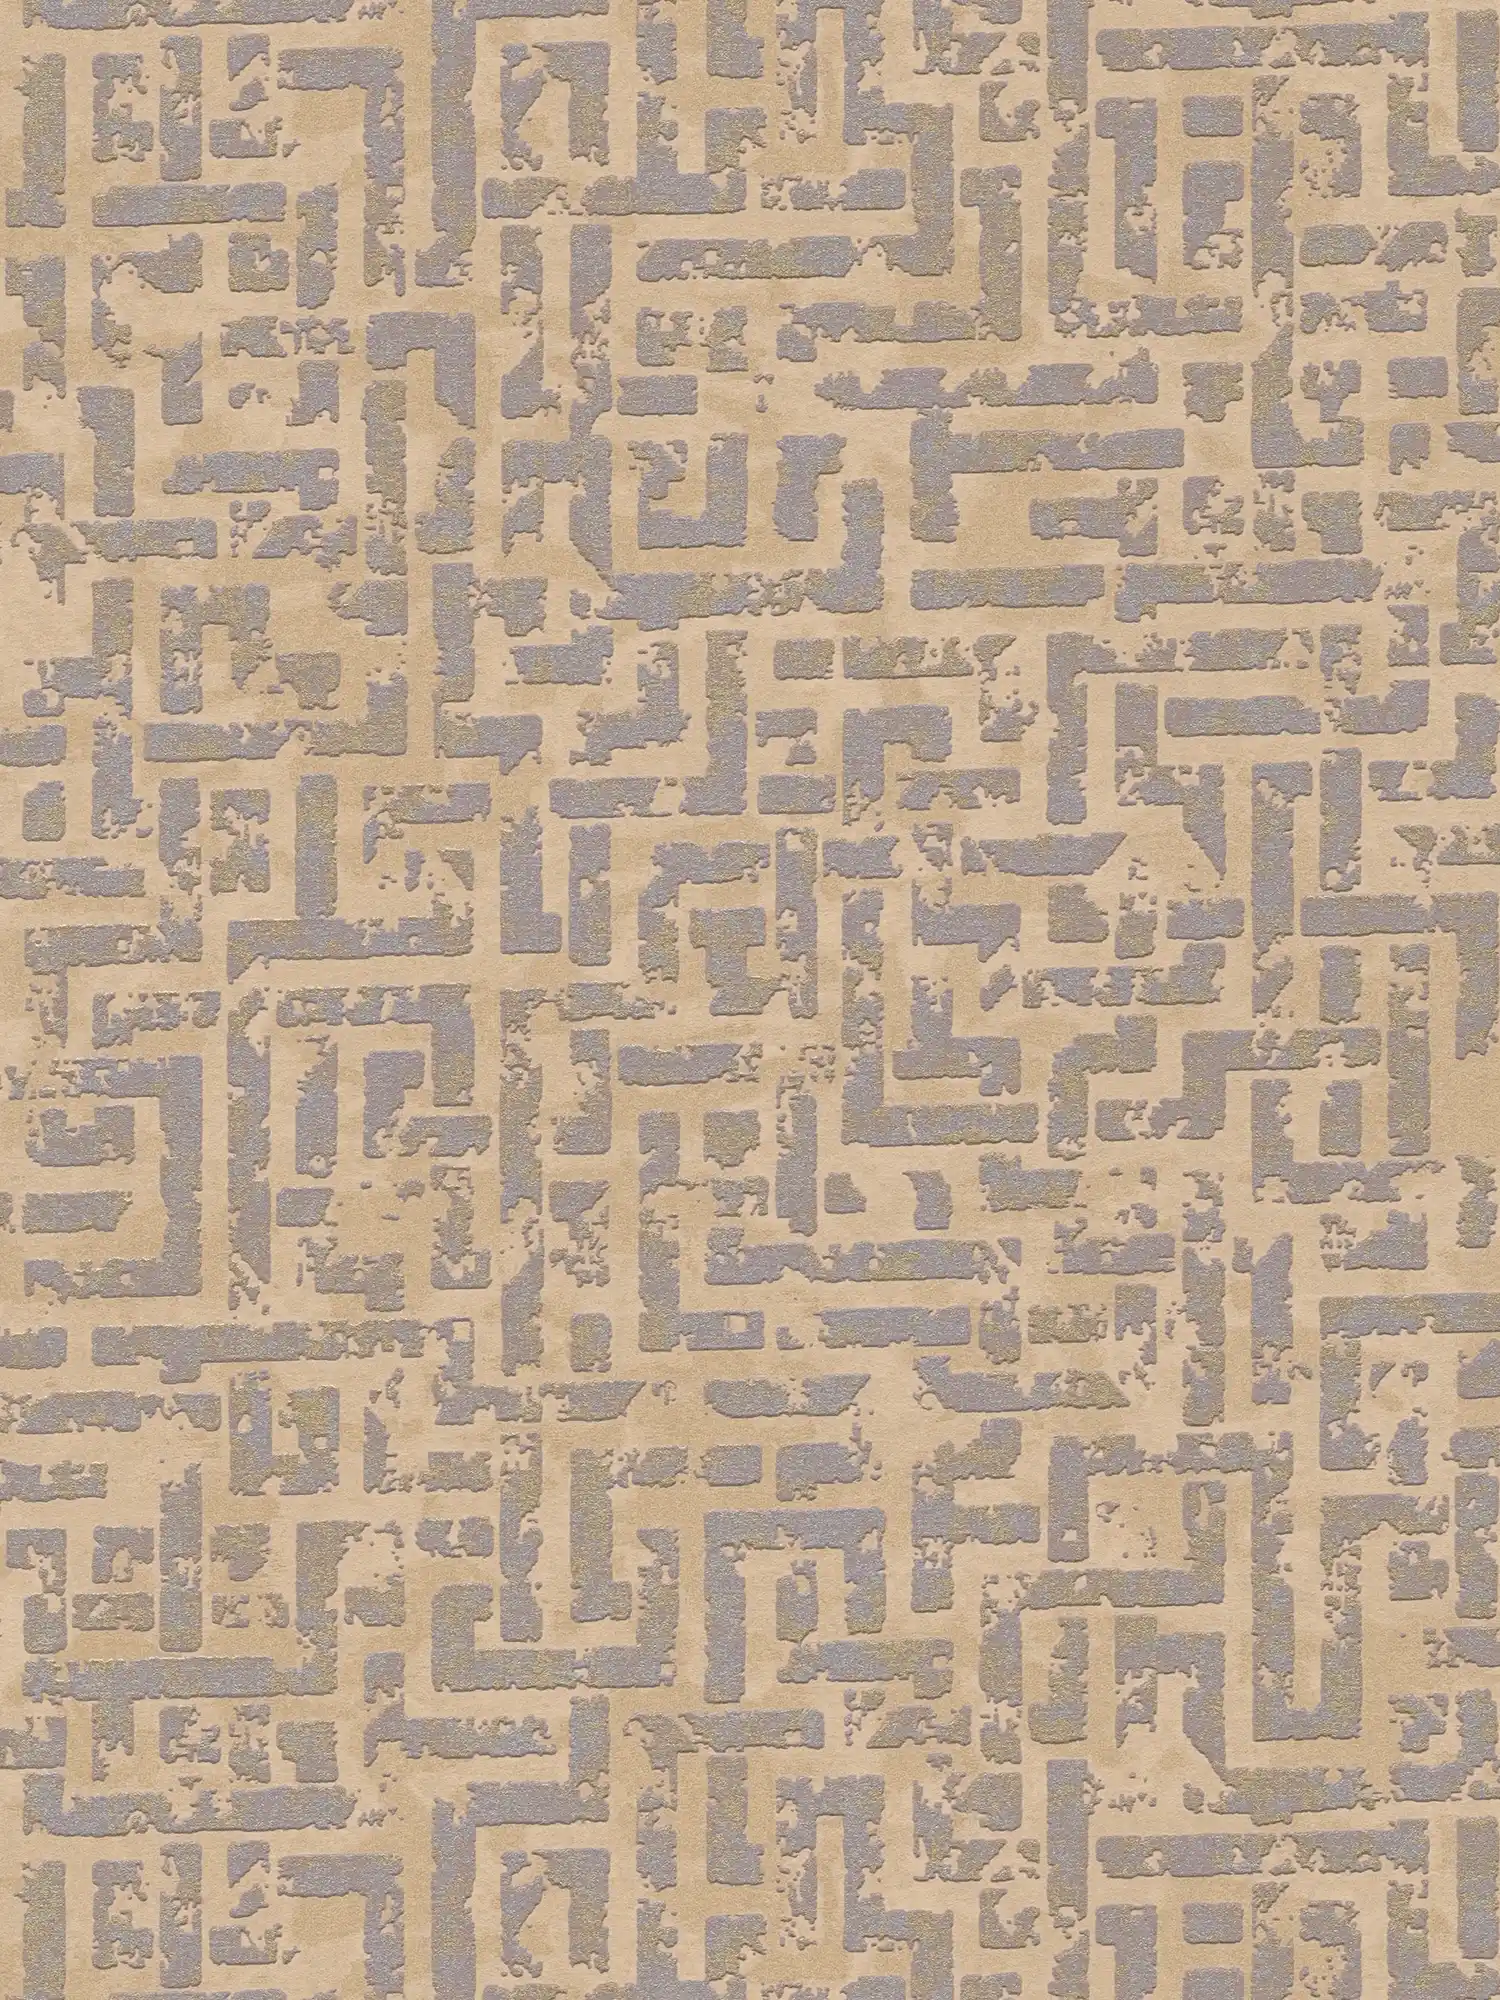 Wallpaper graphic pattern with relief design - beige, metallic
